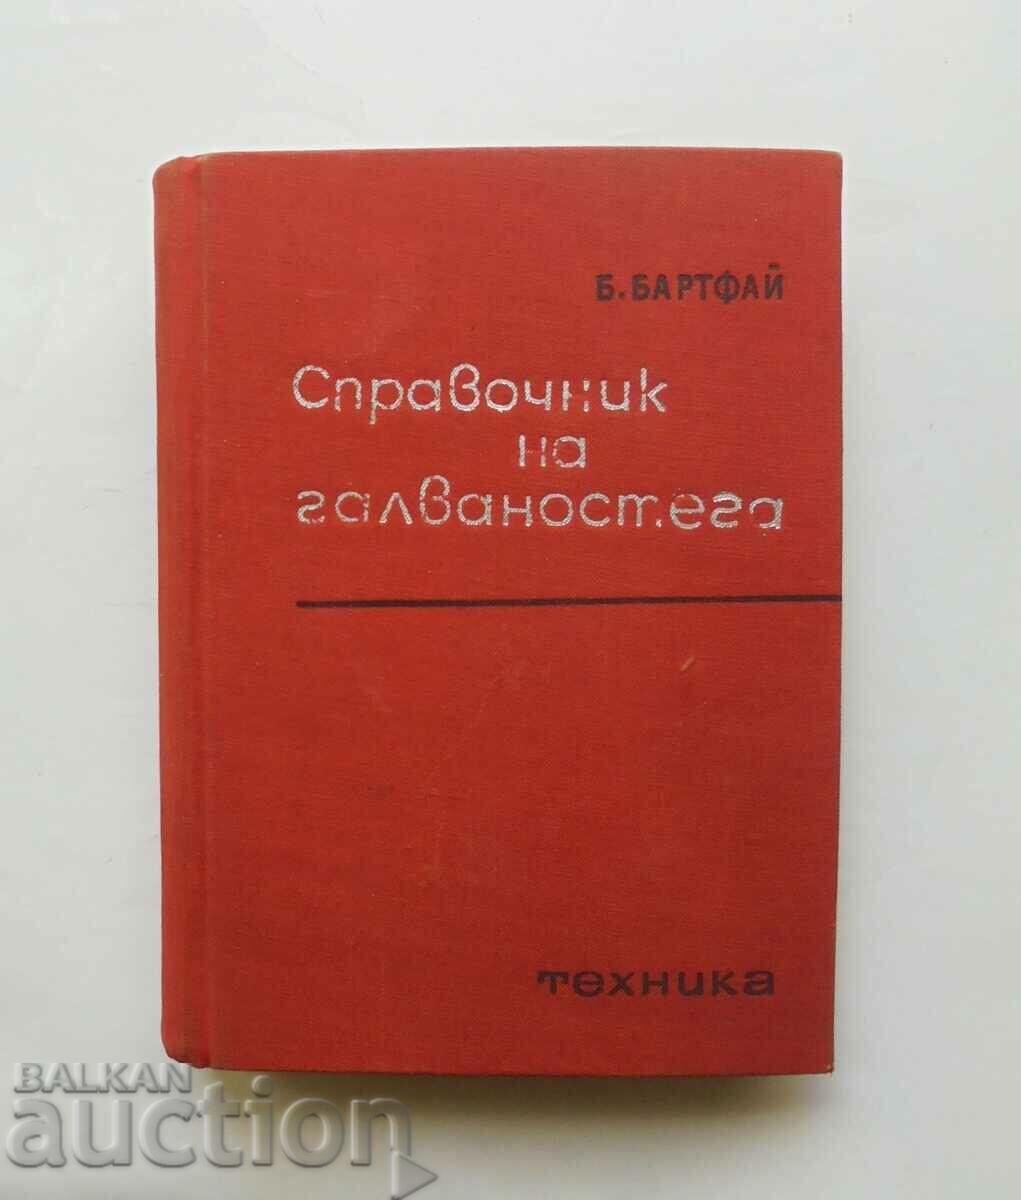 Manual Galvanostega - Bela Bartfay 1967